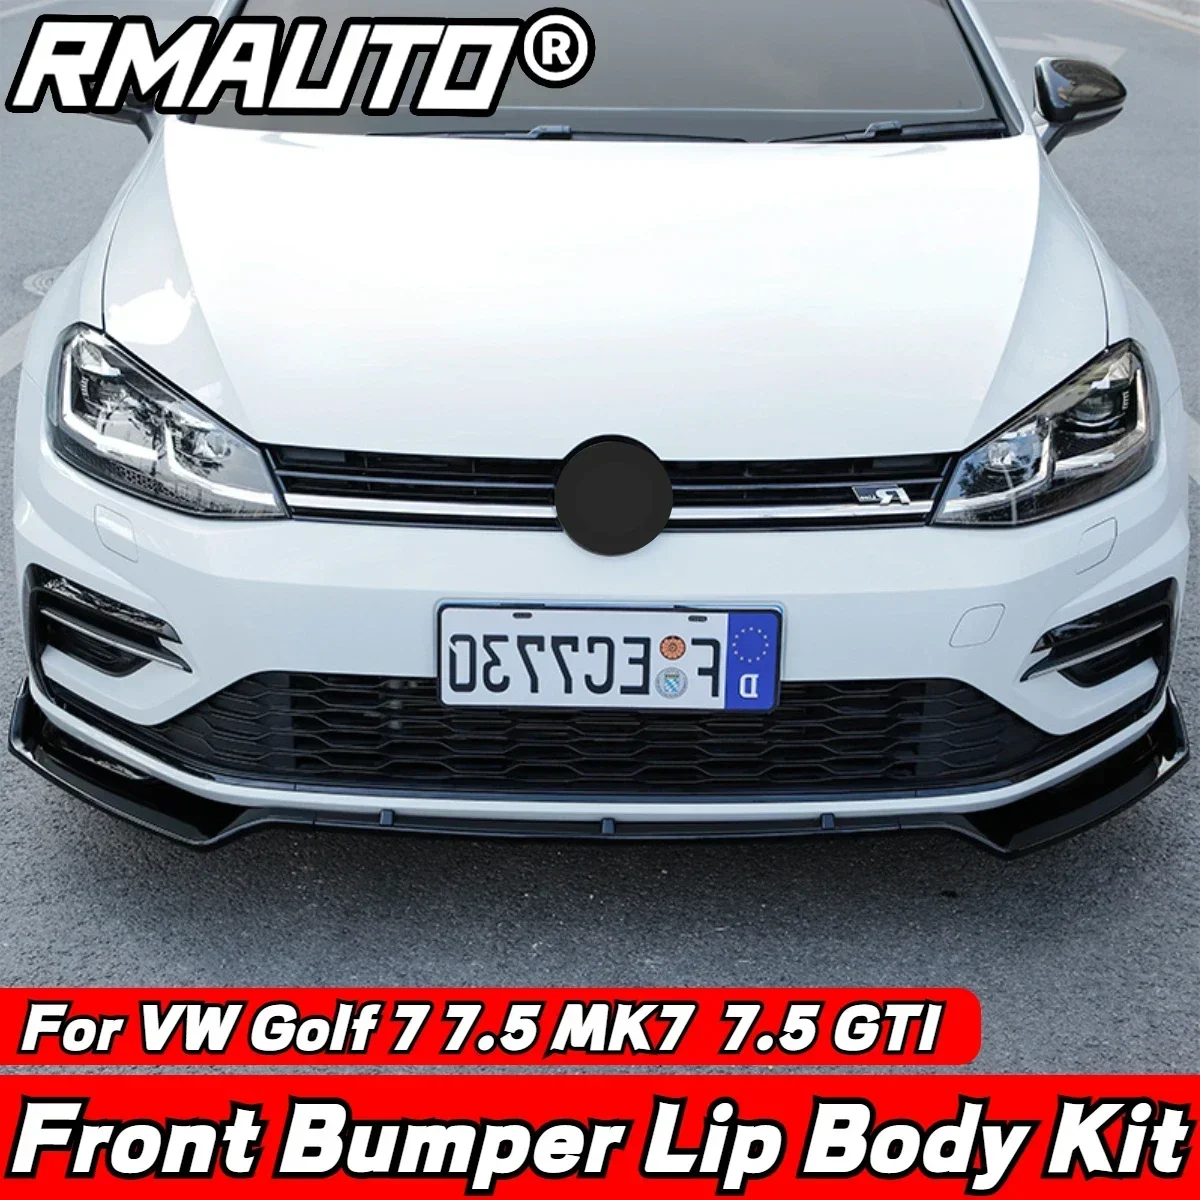 

RMAUTO Carbon Fiber Car Front Bumper Splitter Lip Diffuser Deflector Guard Cover For VW Golf 7 MK7 MK7.5 GTI 2014-2020 Body Kit